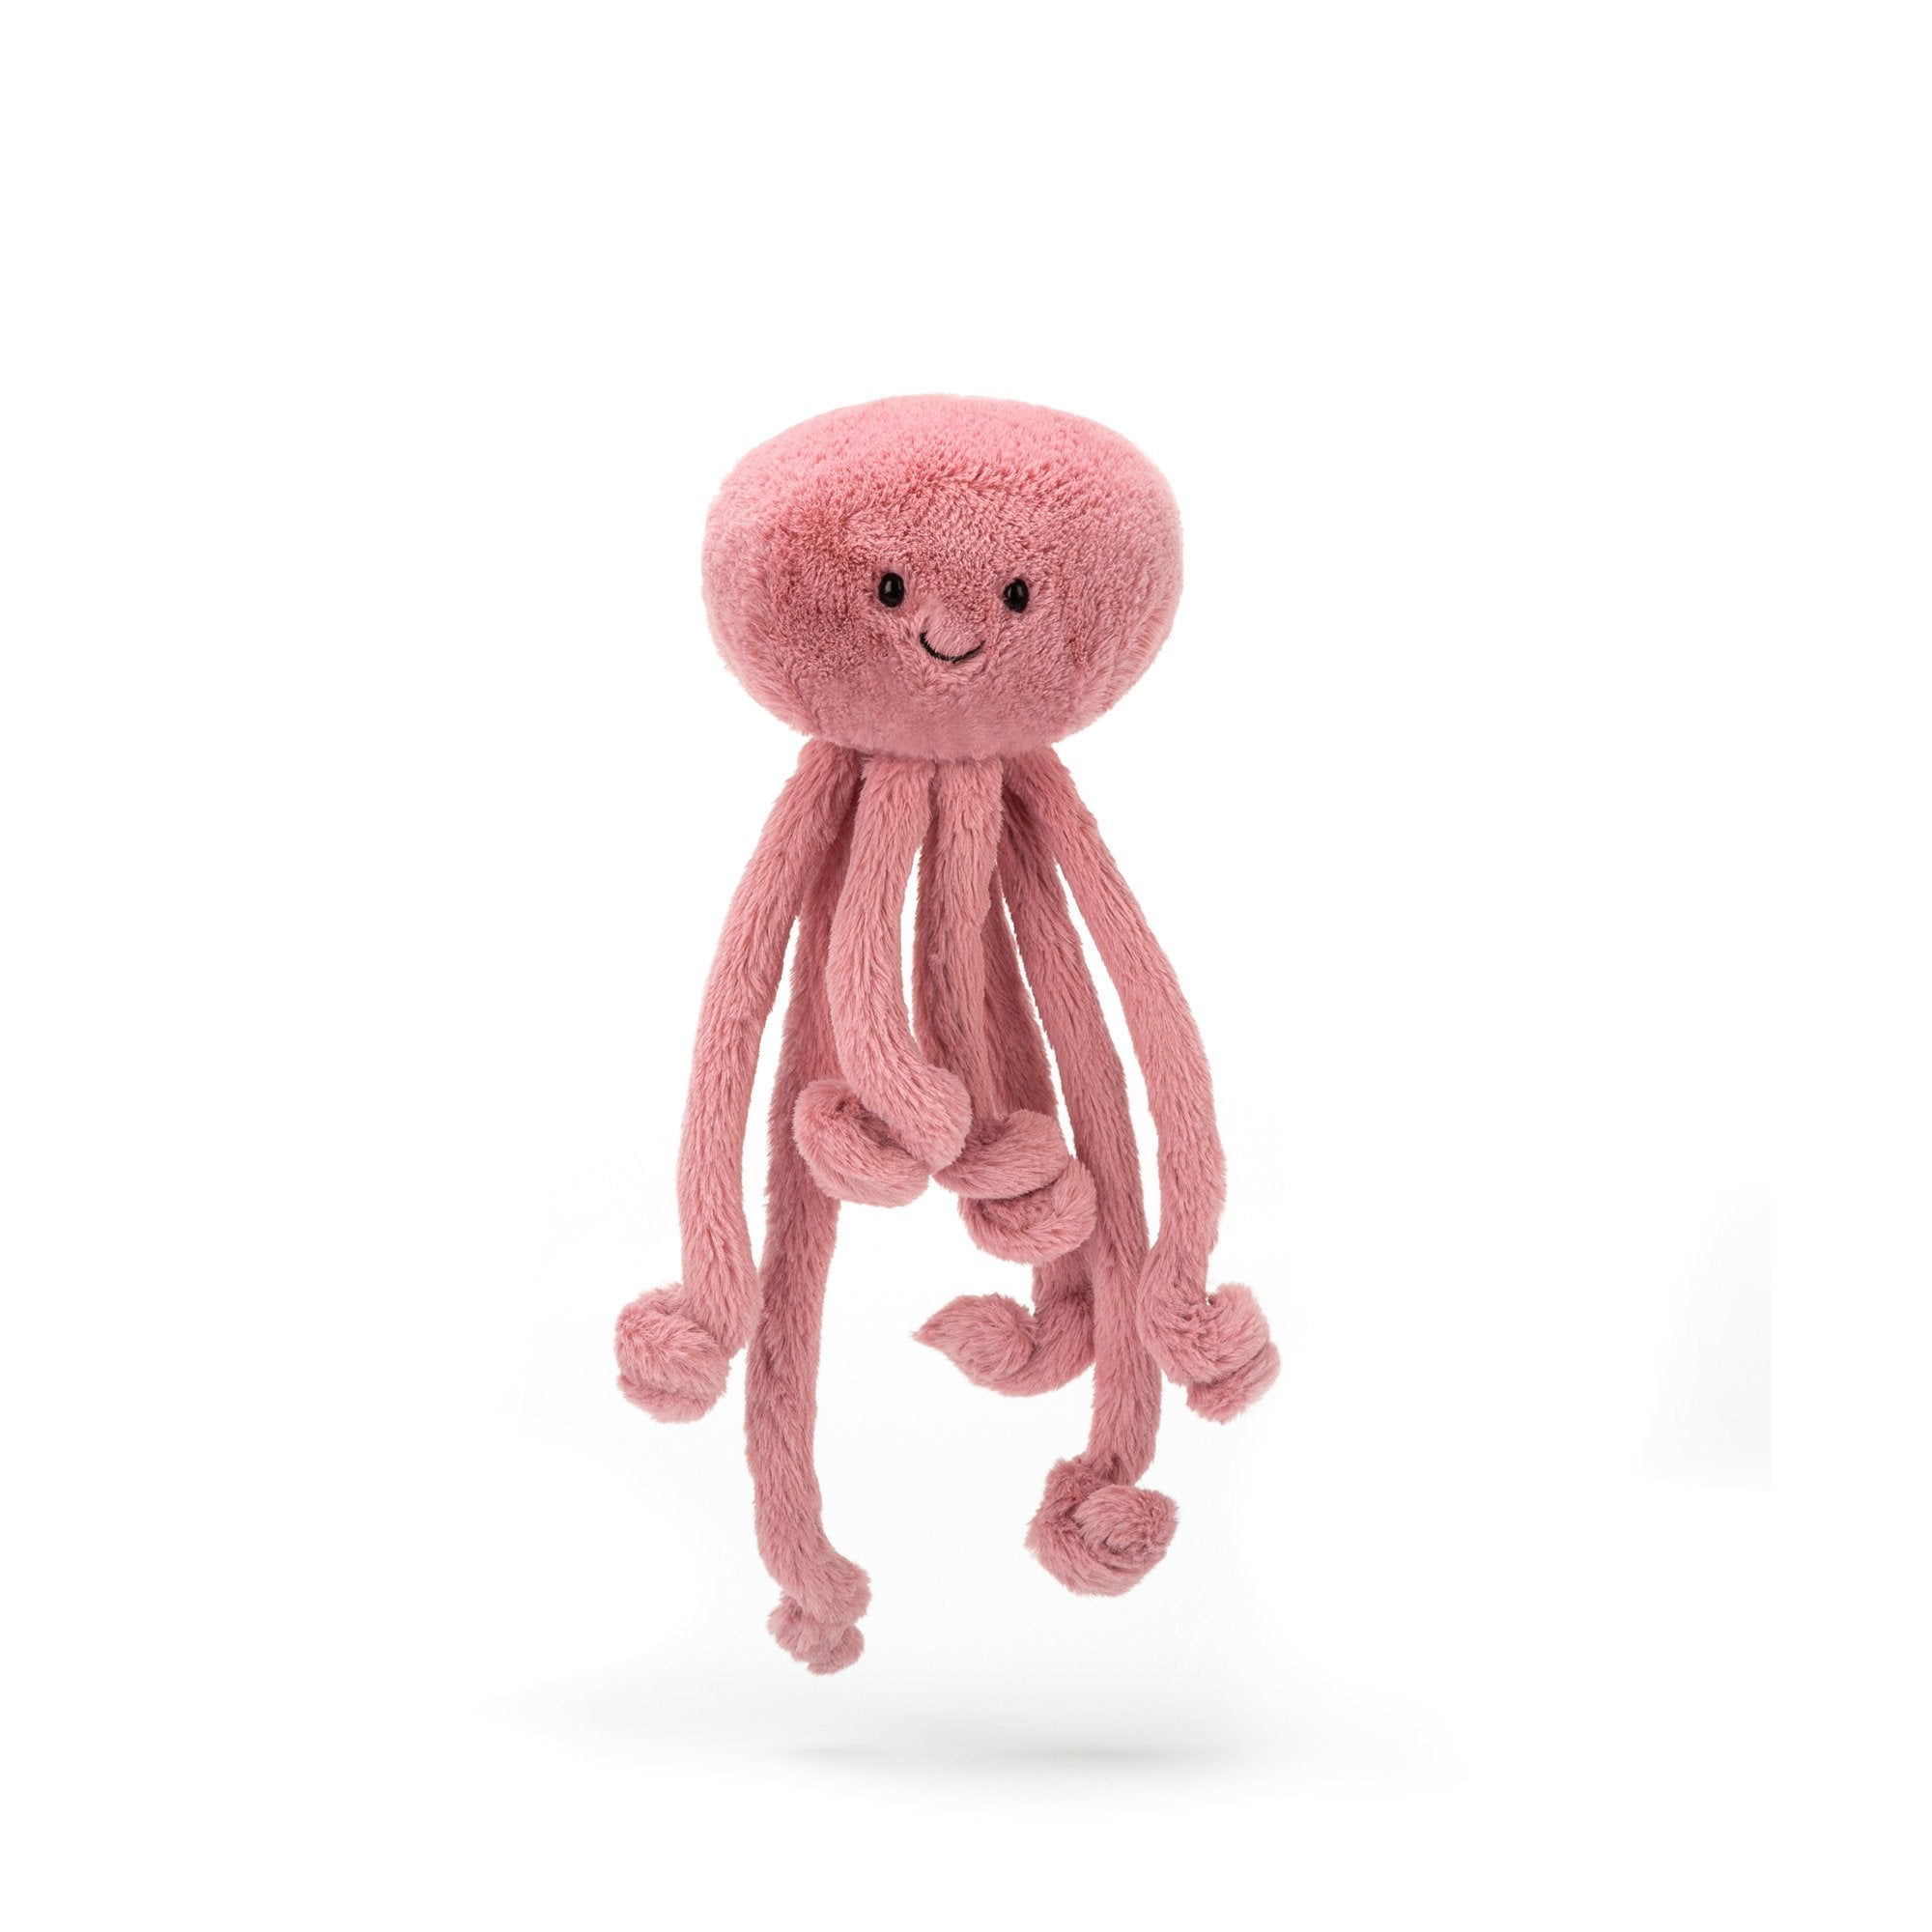 jellyfish soft toy